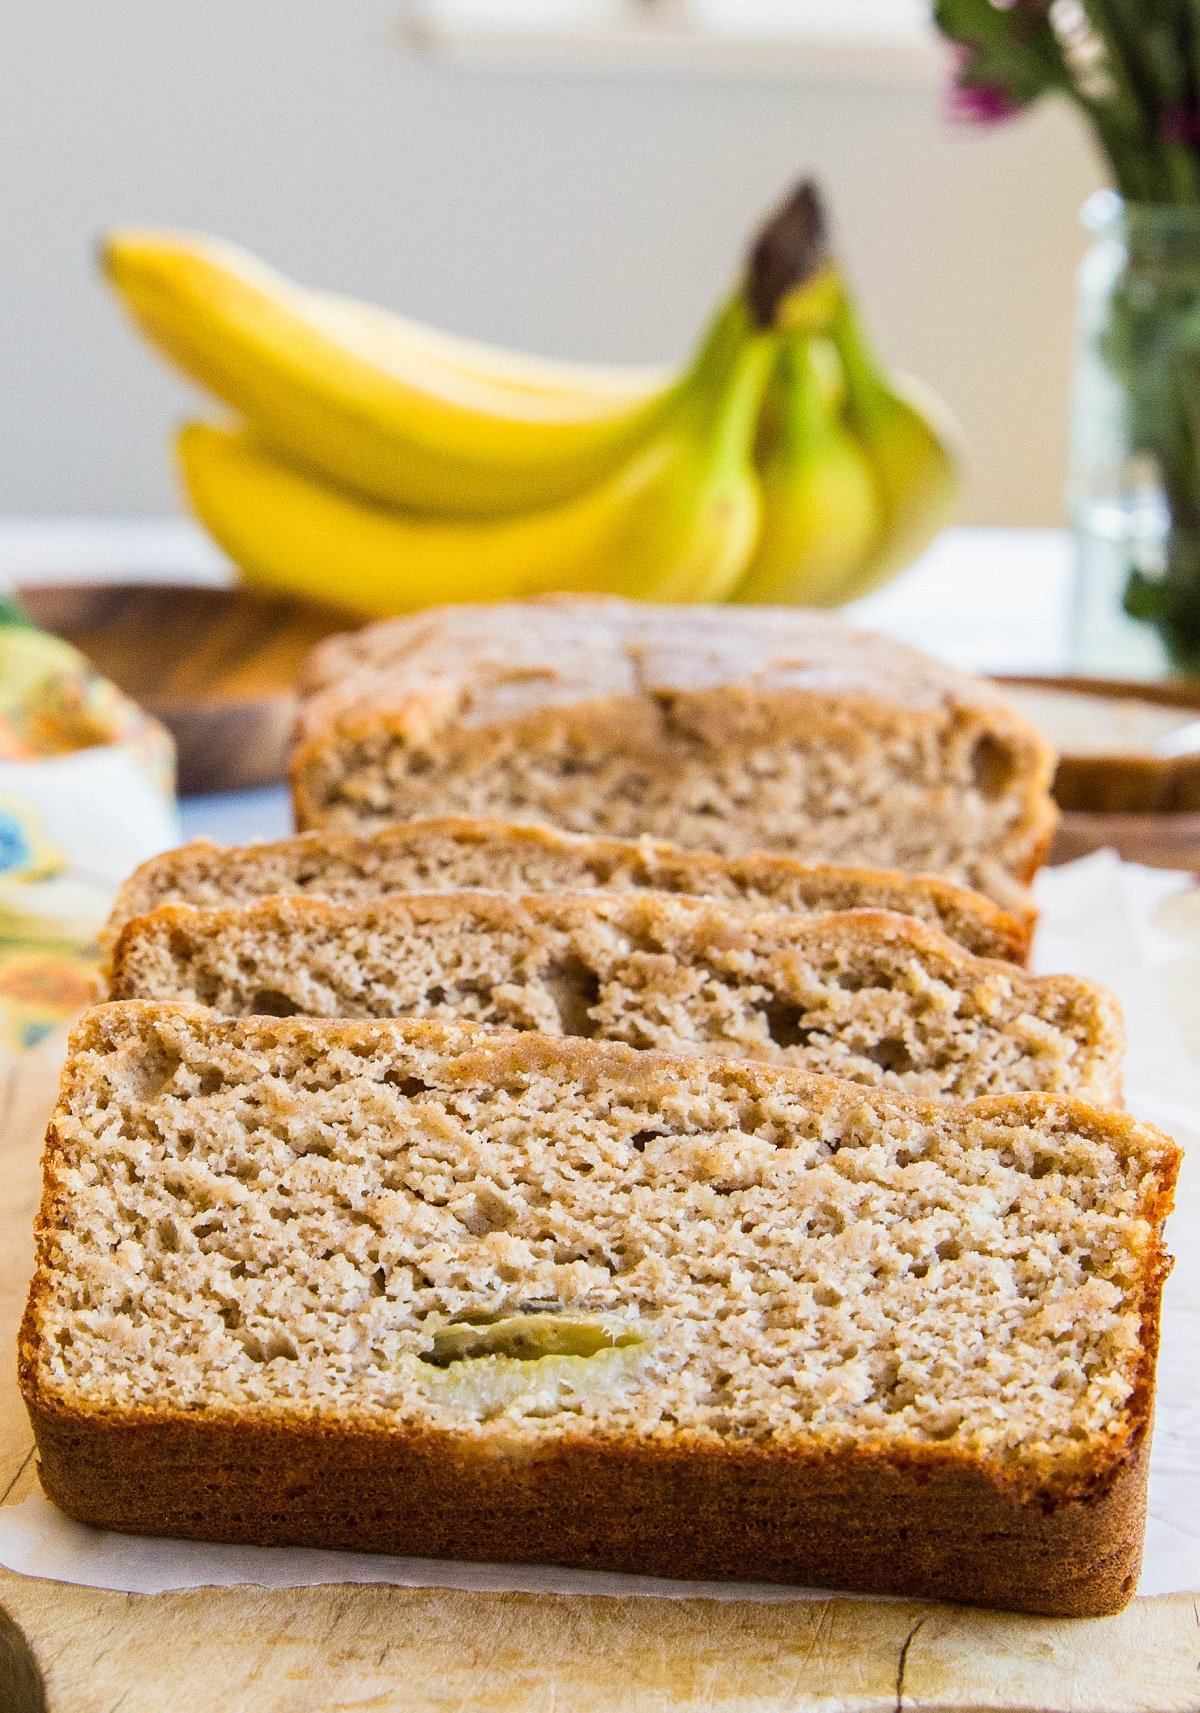 Paleo Banana Bread - grain-free healthy banana bread recipe that is dairy-free, oil-free, and refined sugar-free.